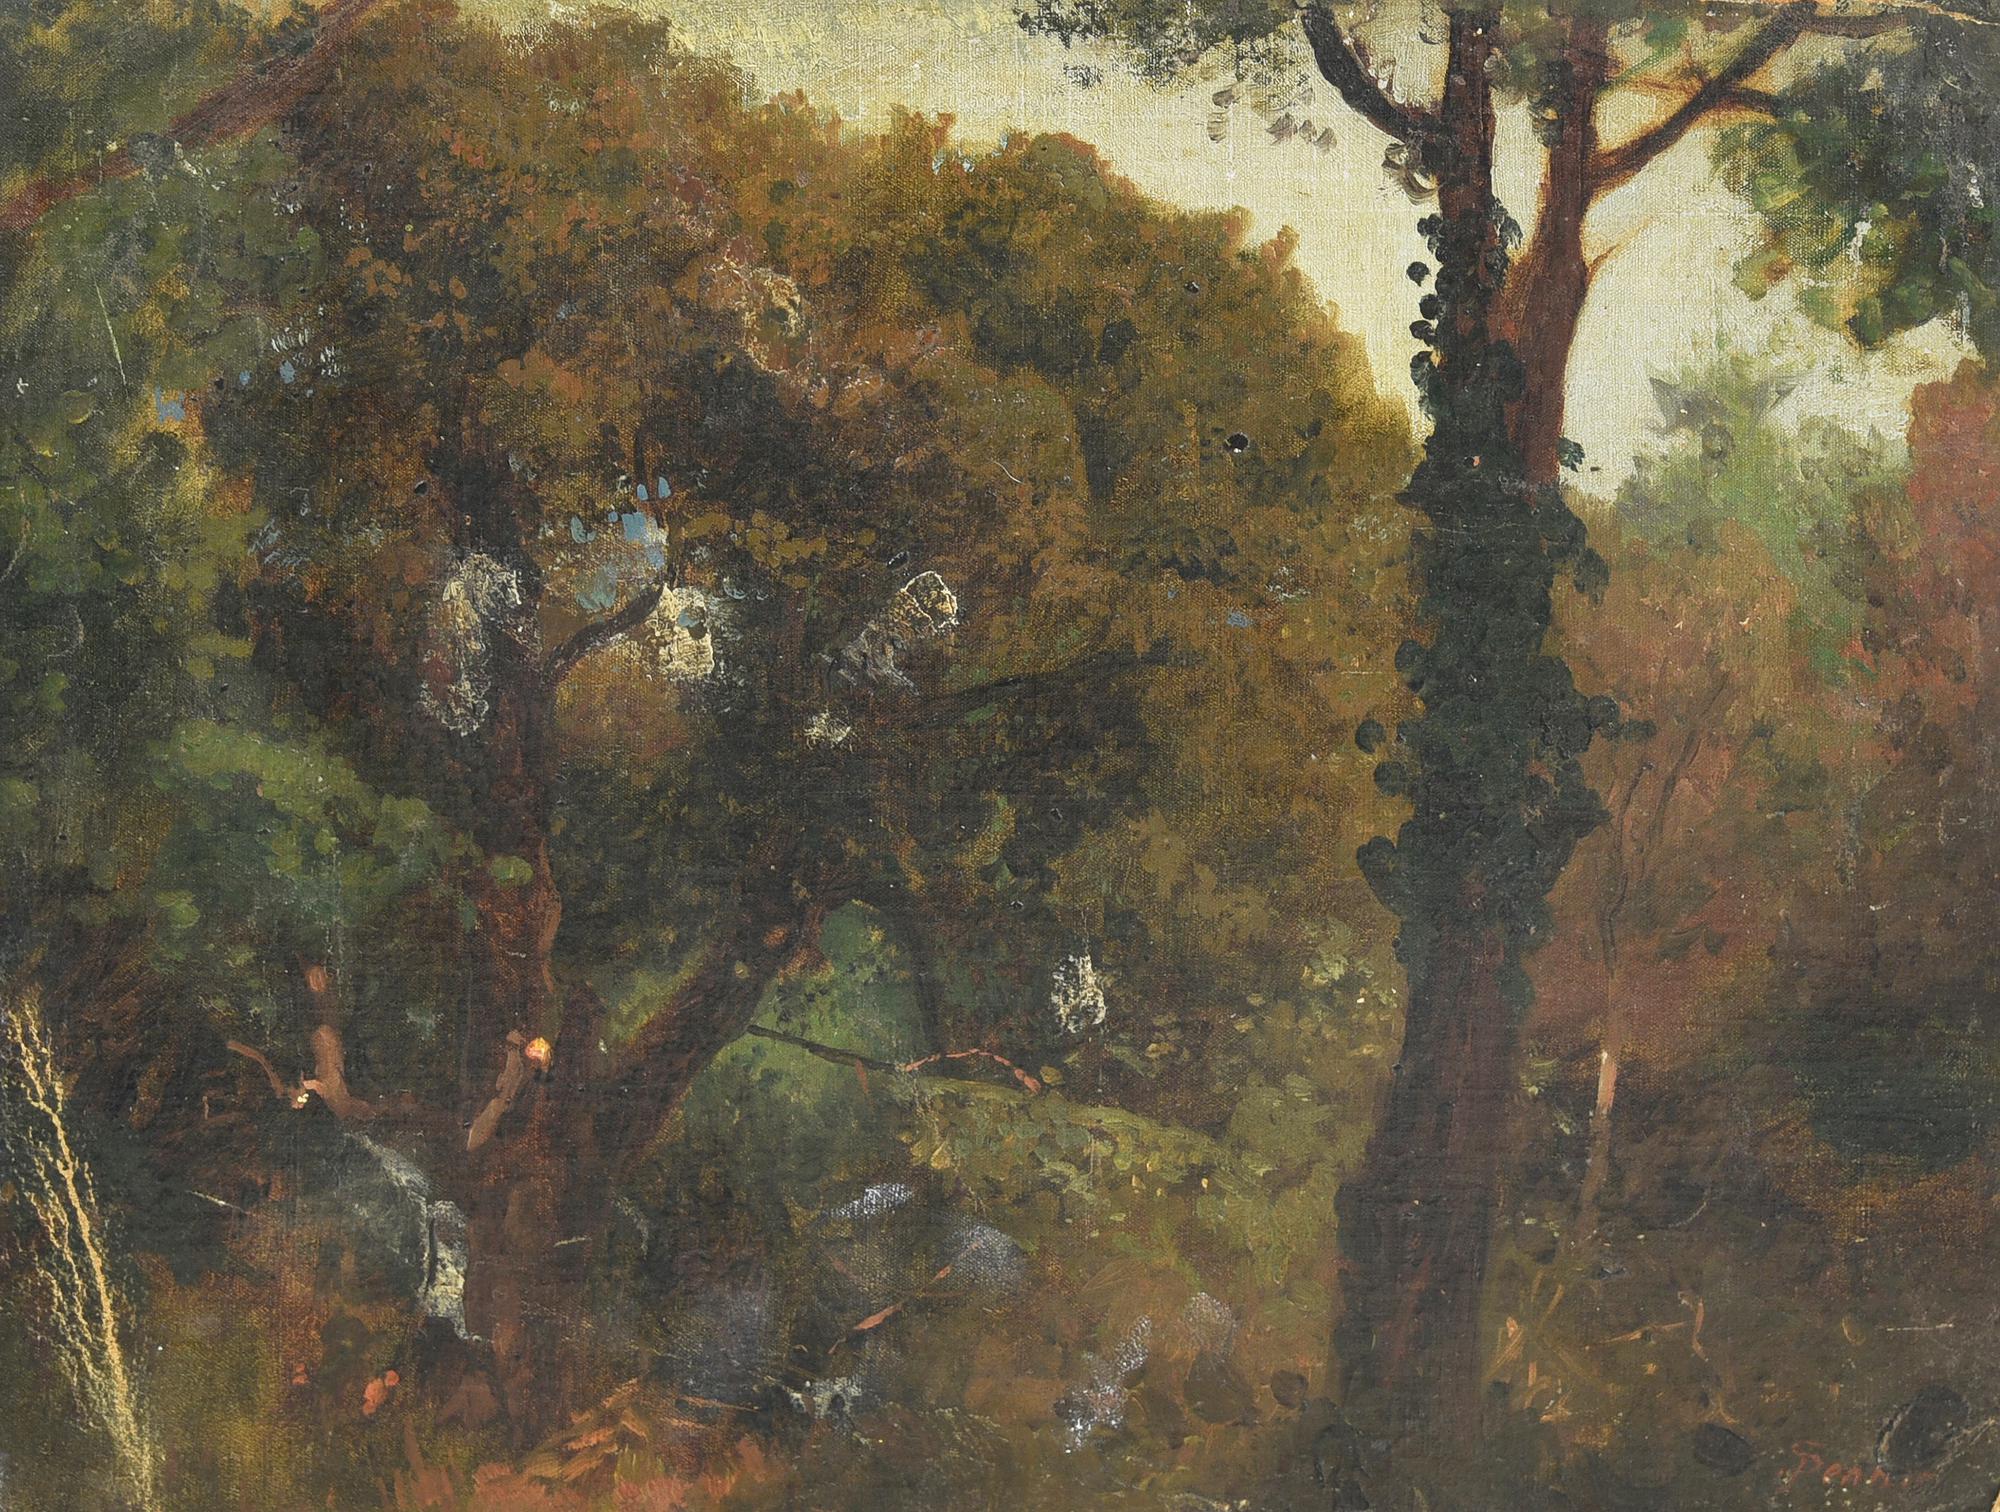 Pietro Senno (1831 - 1905) BOSCO olio su cartone, cm 25x32 firma